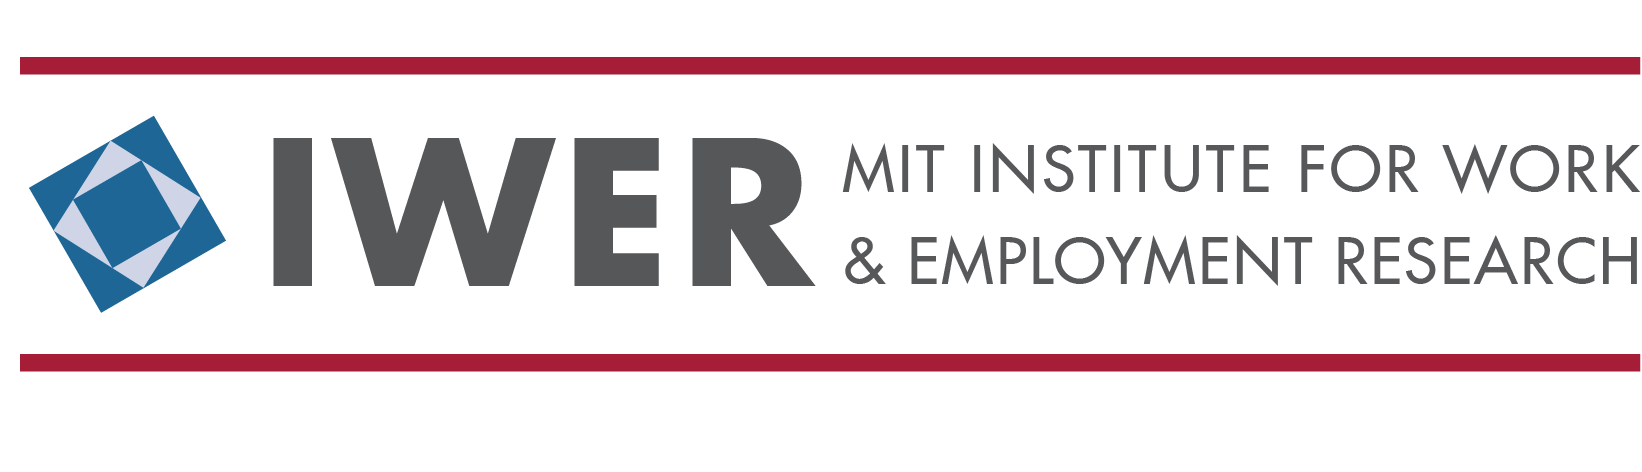 MIT IWER logo